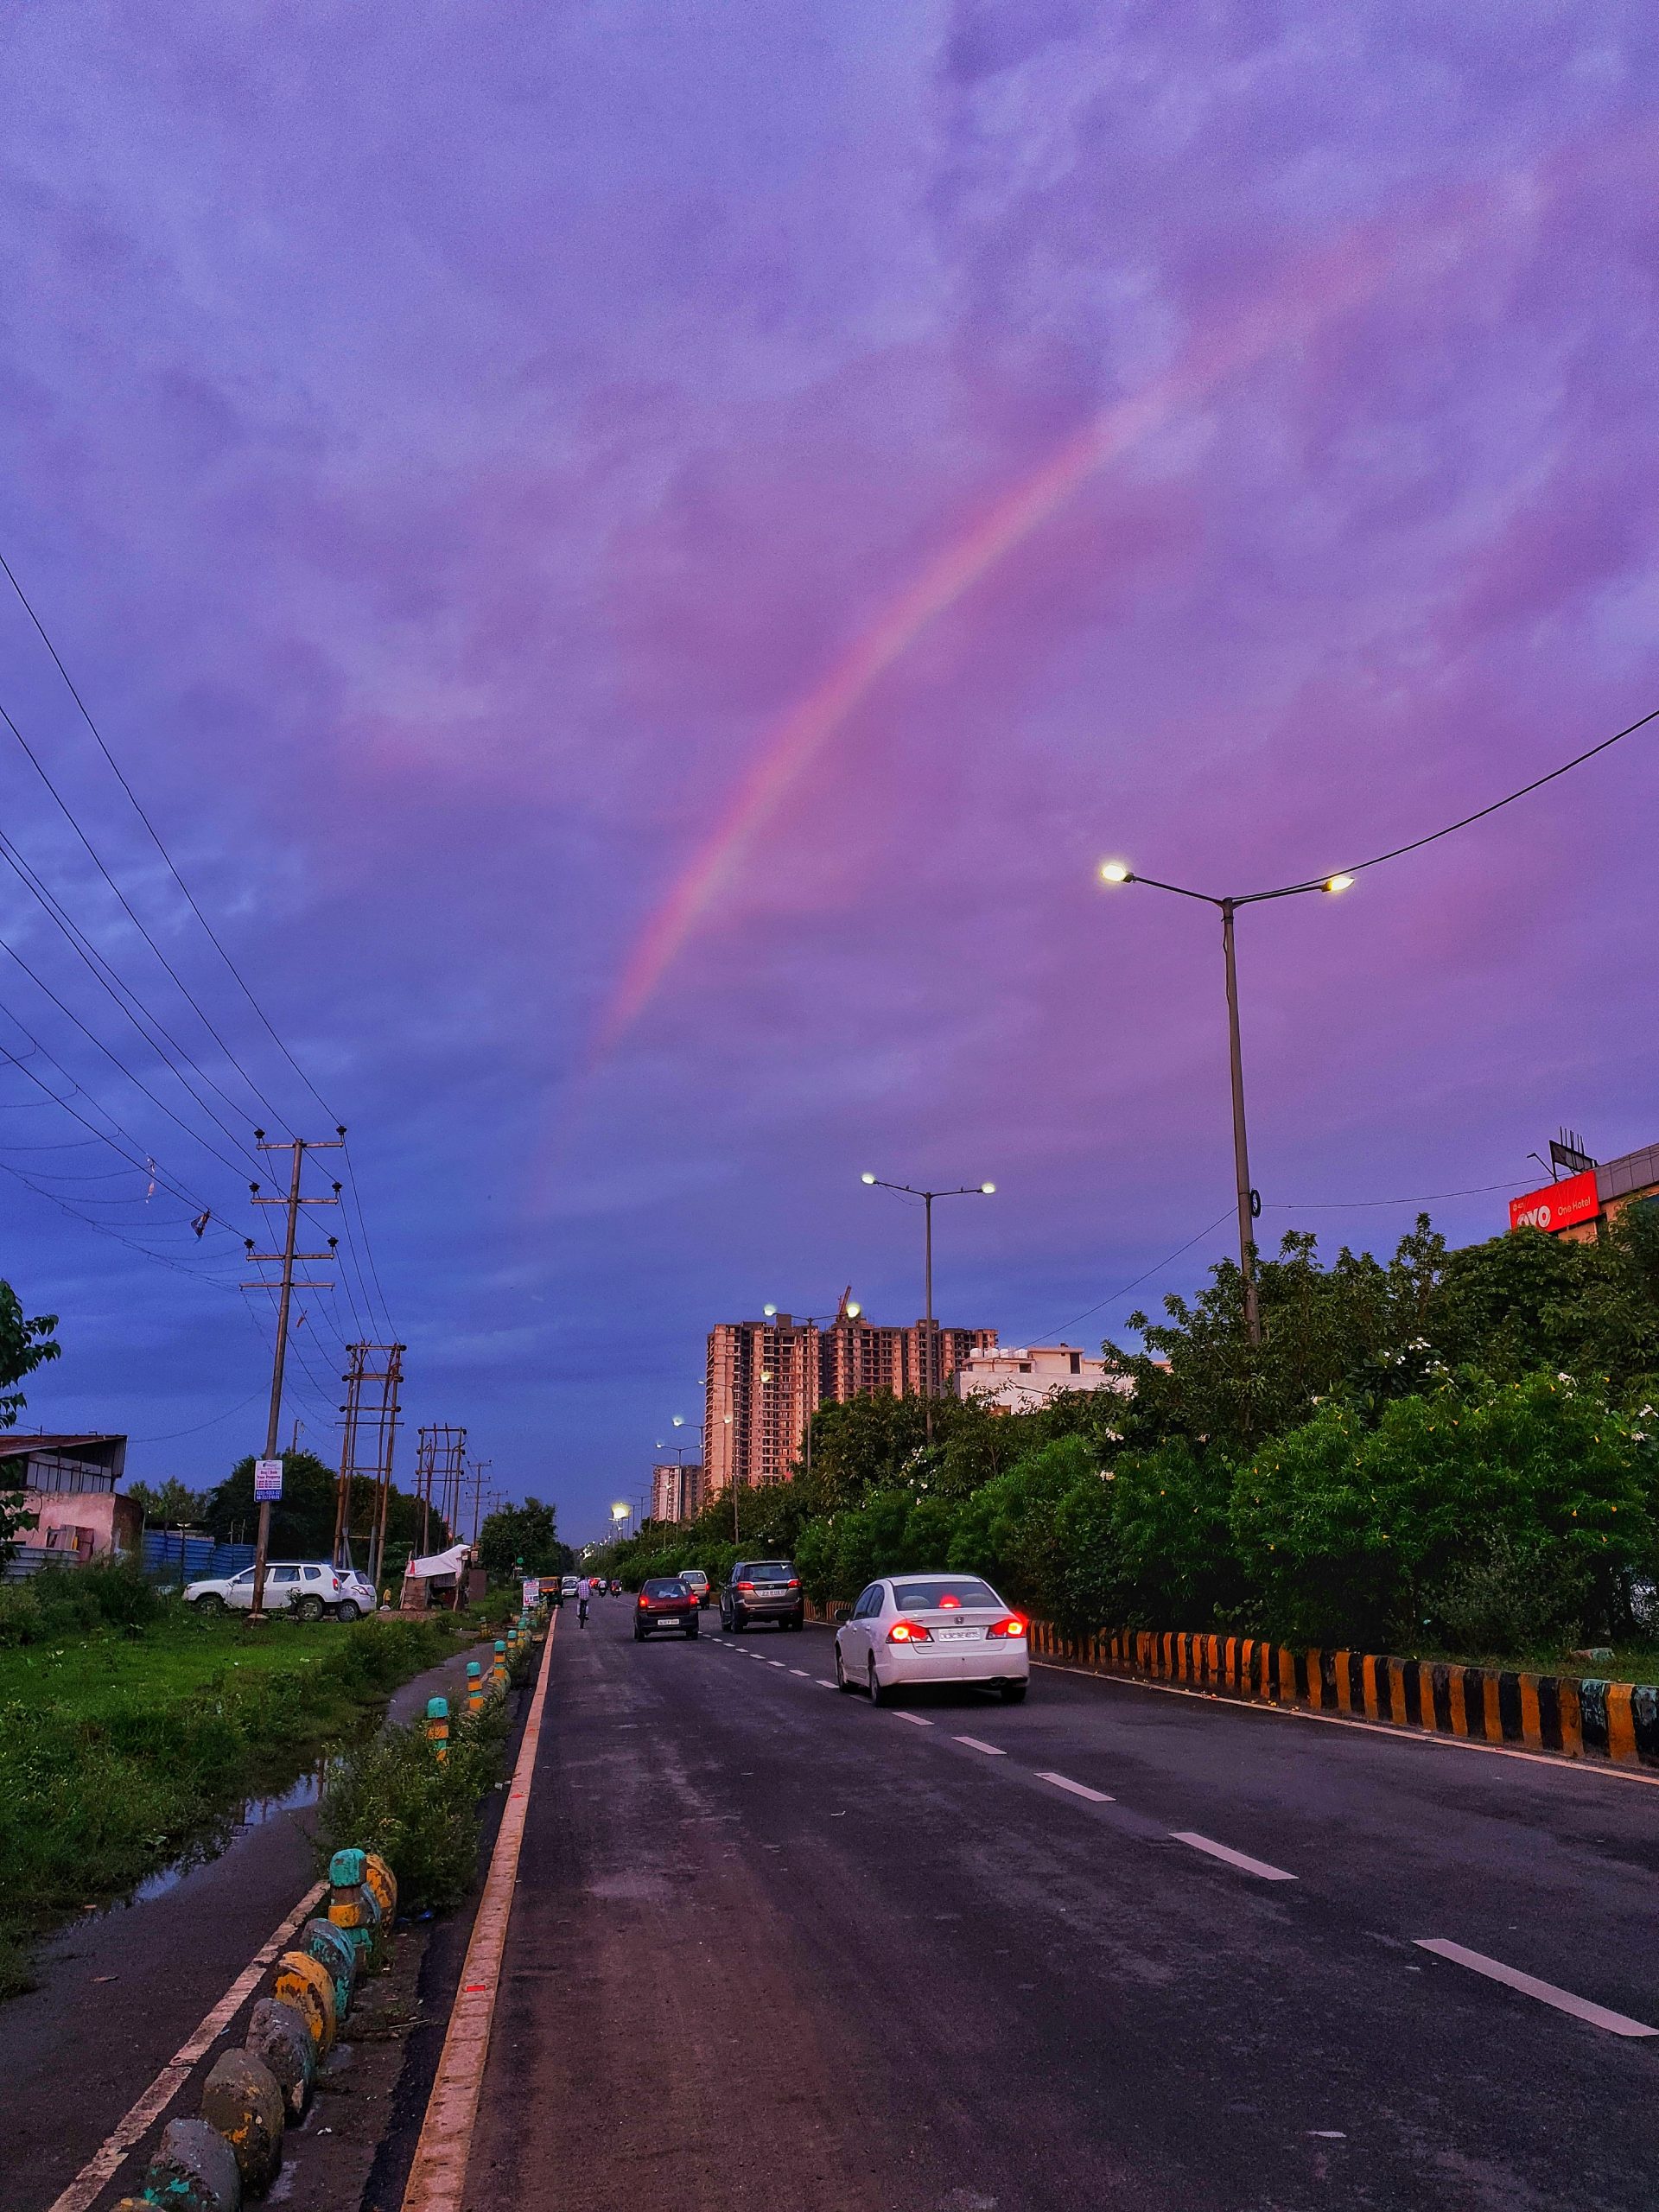 Sunset sky and rainbow